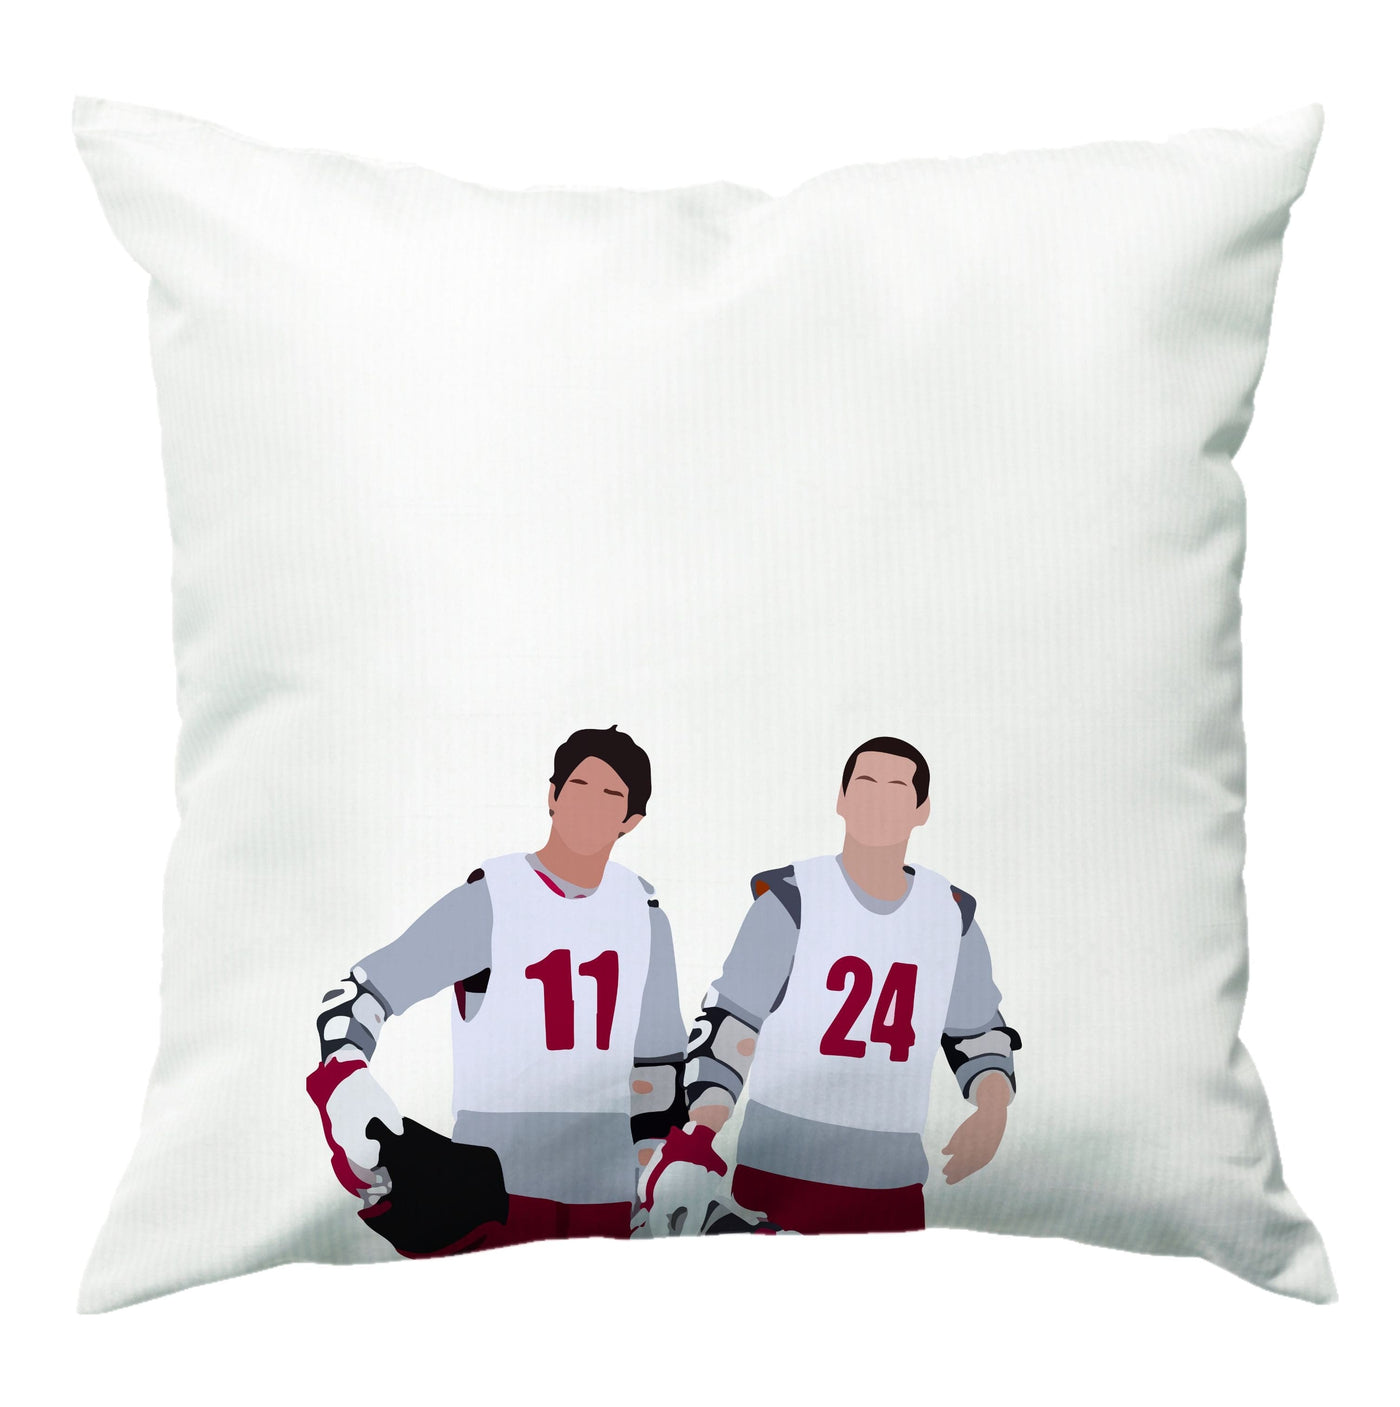 Scott and Stiles Football - Teen Wolf  Cushion